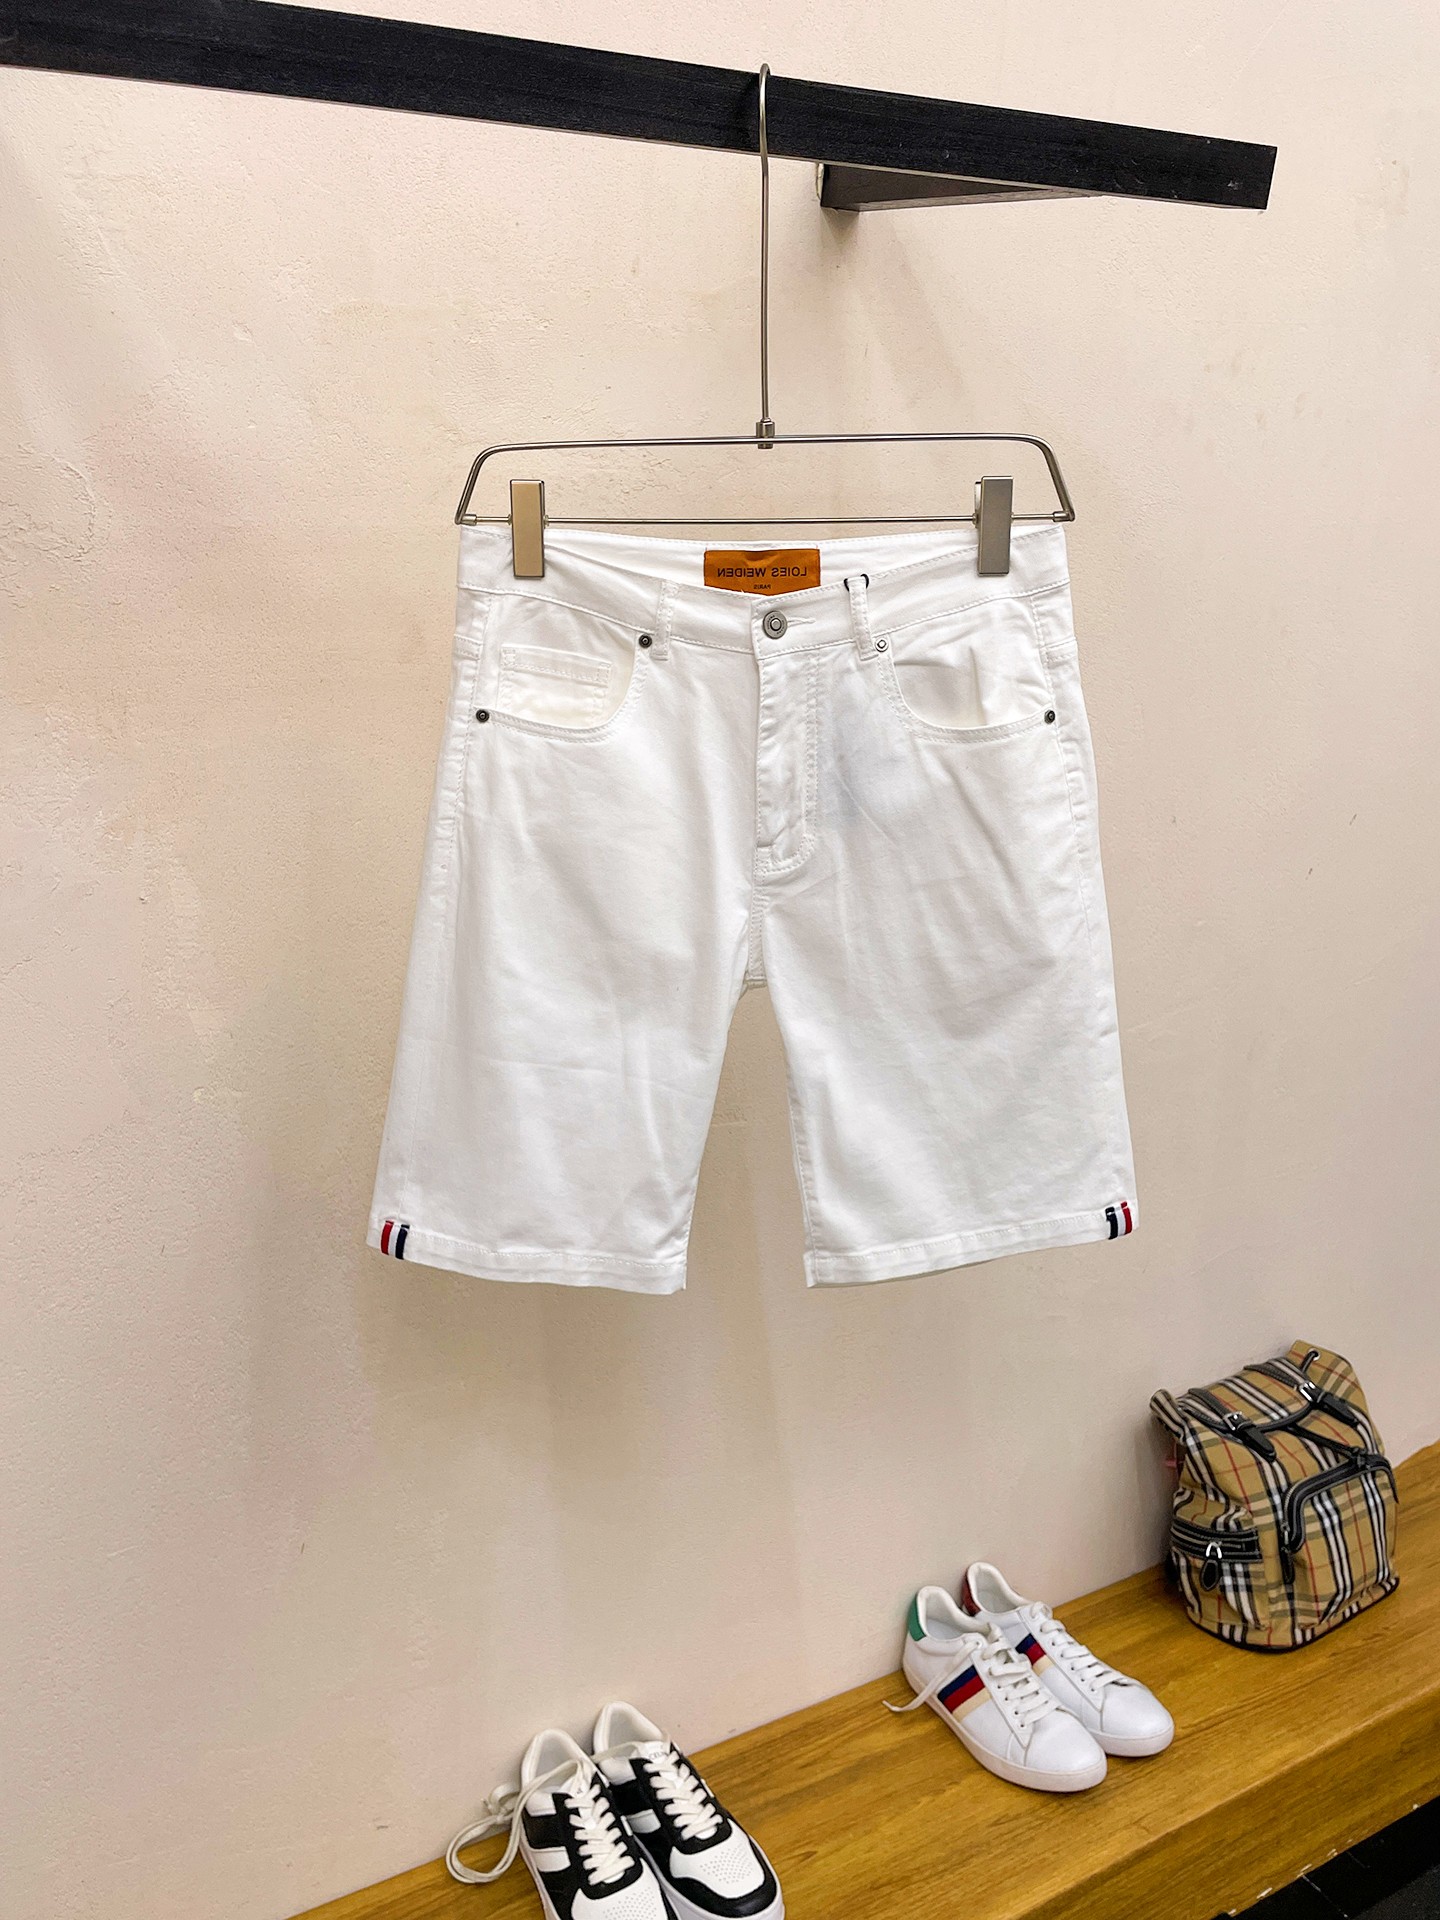 Louis Vuitton Clothing Jeans Shorts Men Summer Collection